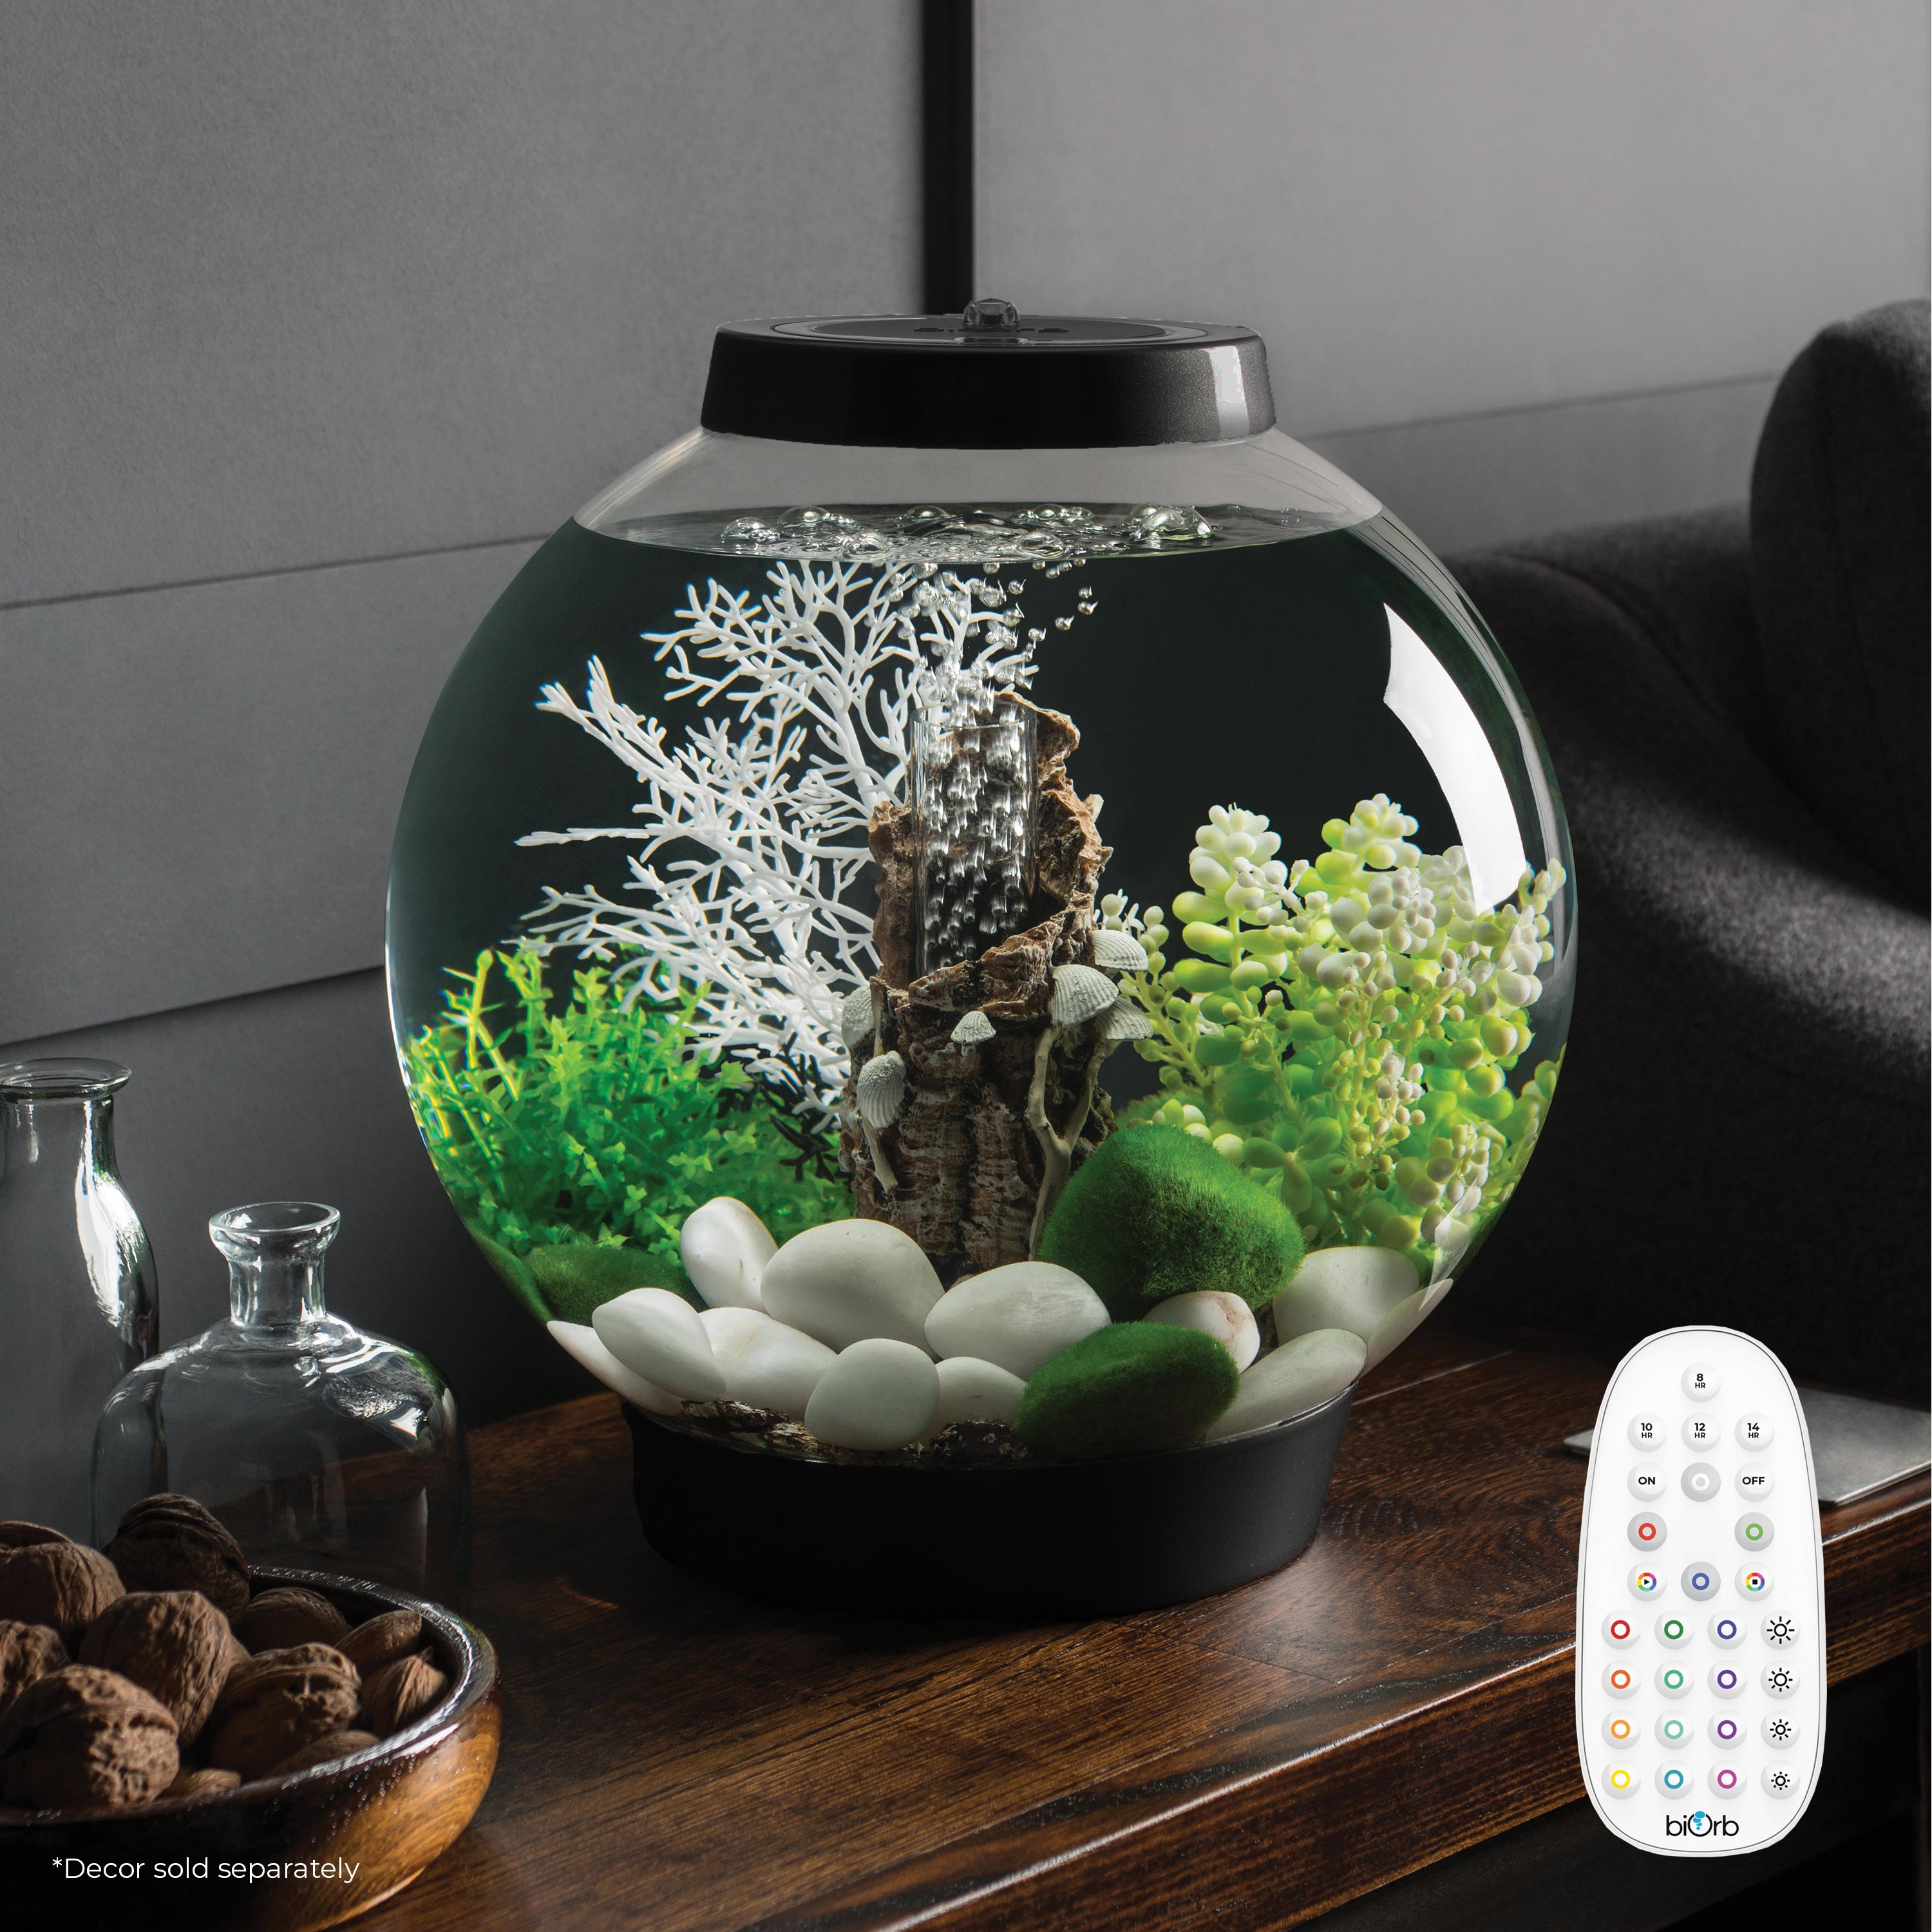 Get inspiration for your aquarium design by using CLASSIC 15 Aquarium with MCR Light - 4 gallon in black that features remote